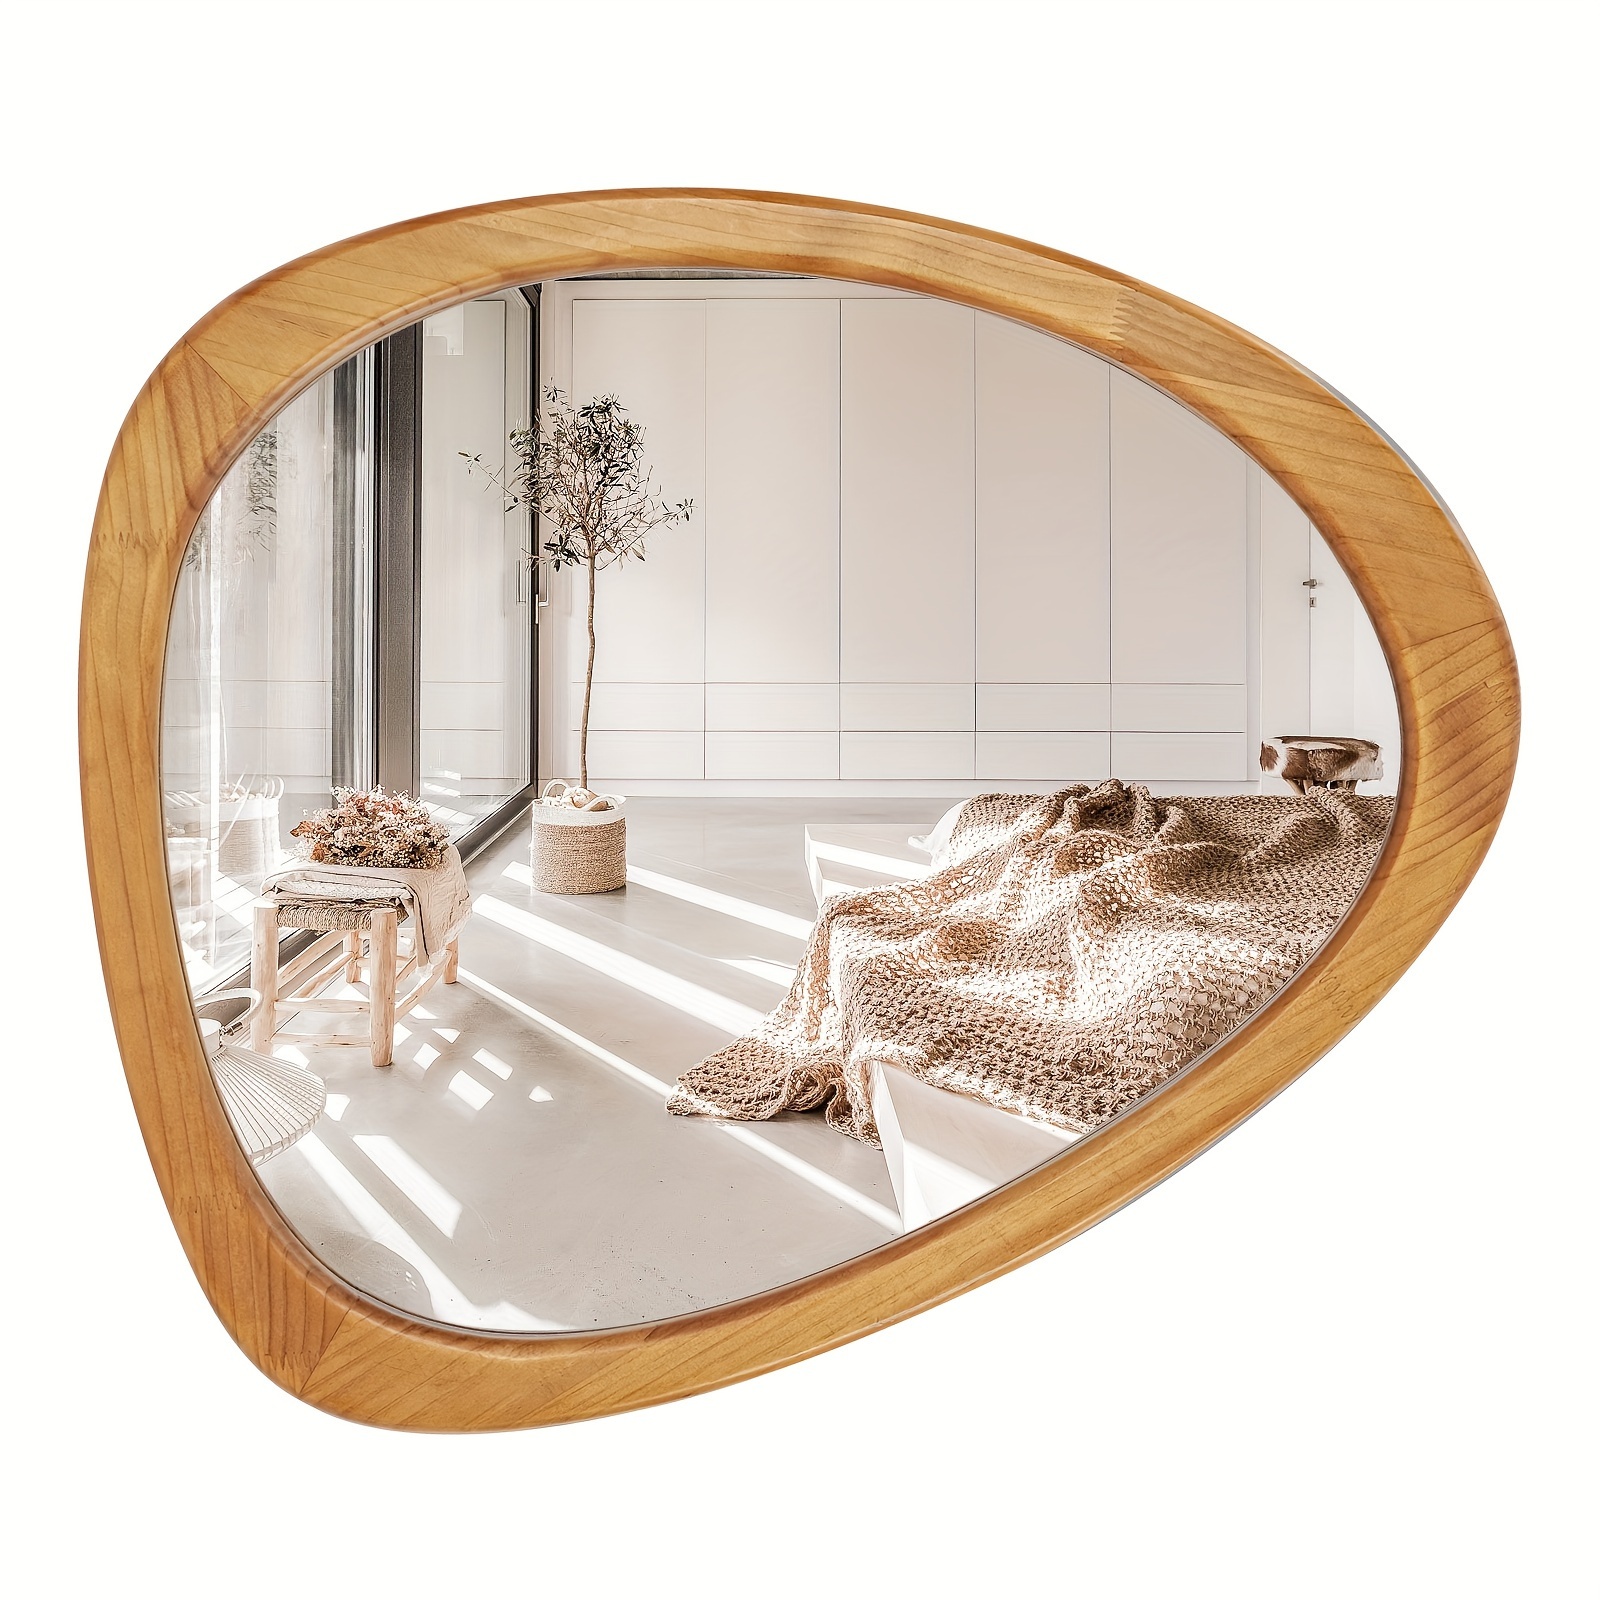 

Asymmetrical Mirror, Irregular Wall Mirror For Bathroom, Wall Mirrors Decorative For Bedroom Living Room Entryway Hall, Wood Framed Walnut Mirror 23.5" H X 19" W